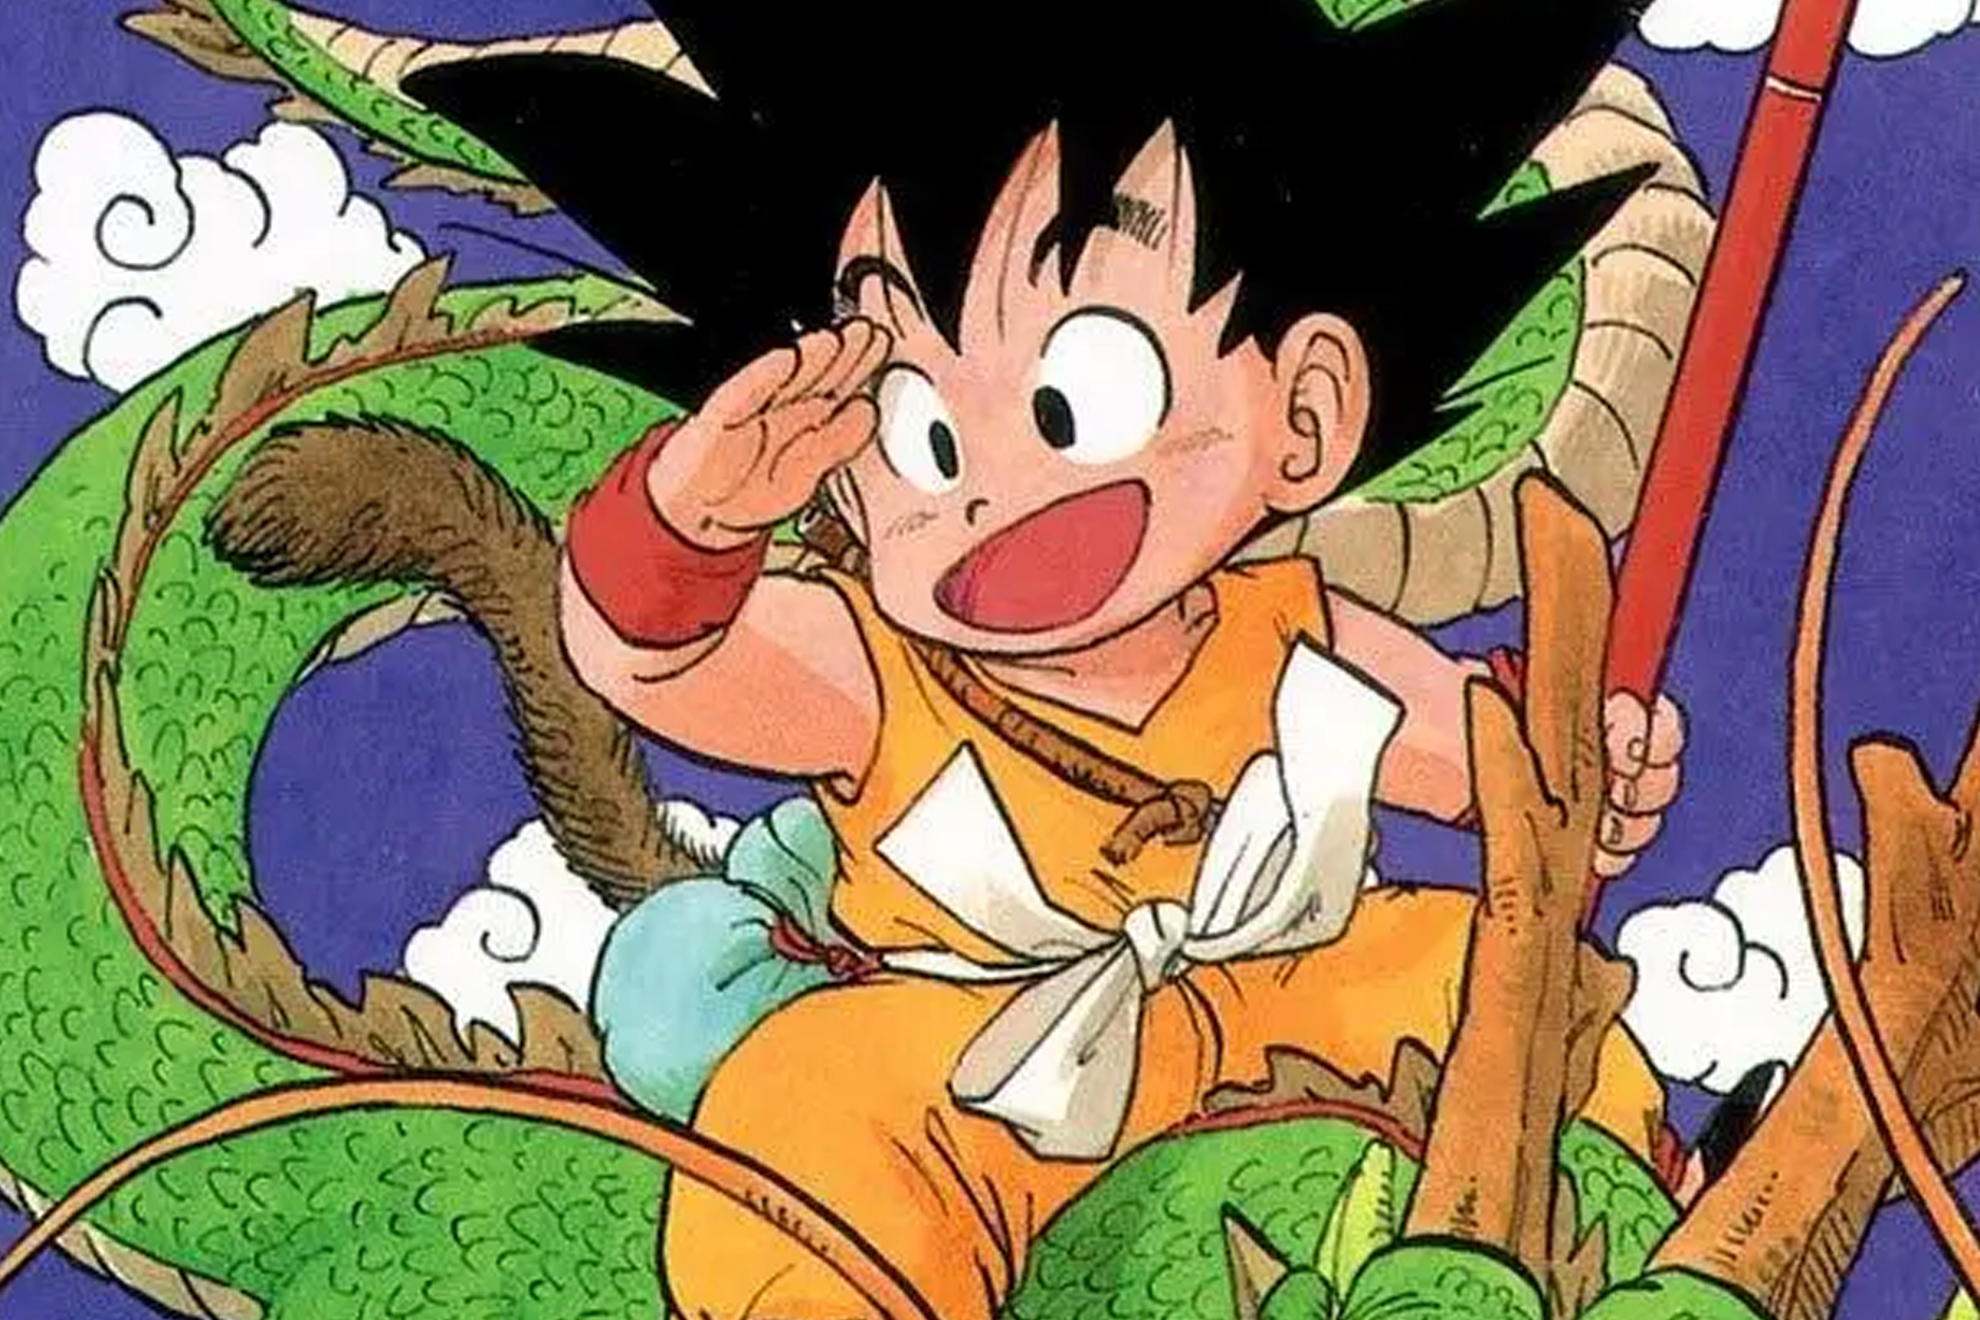 Akira Toriyama y sus primeros dibujos sobre Dragon Ball. As es el origen del manga